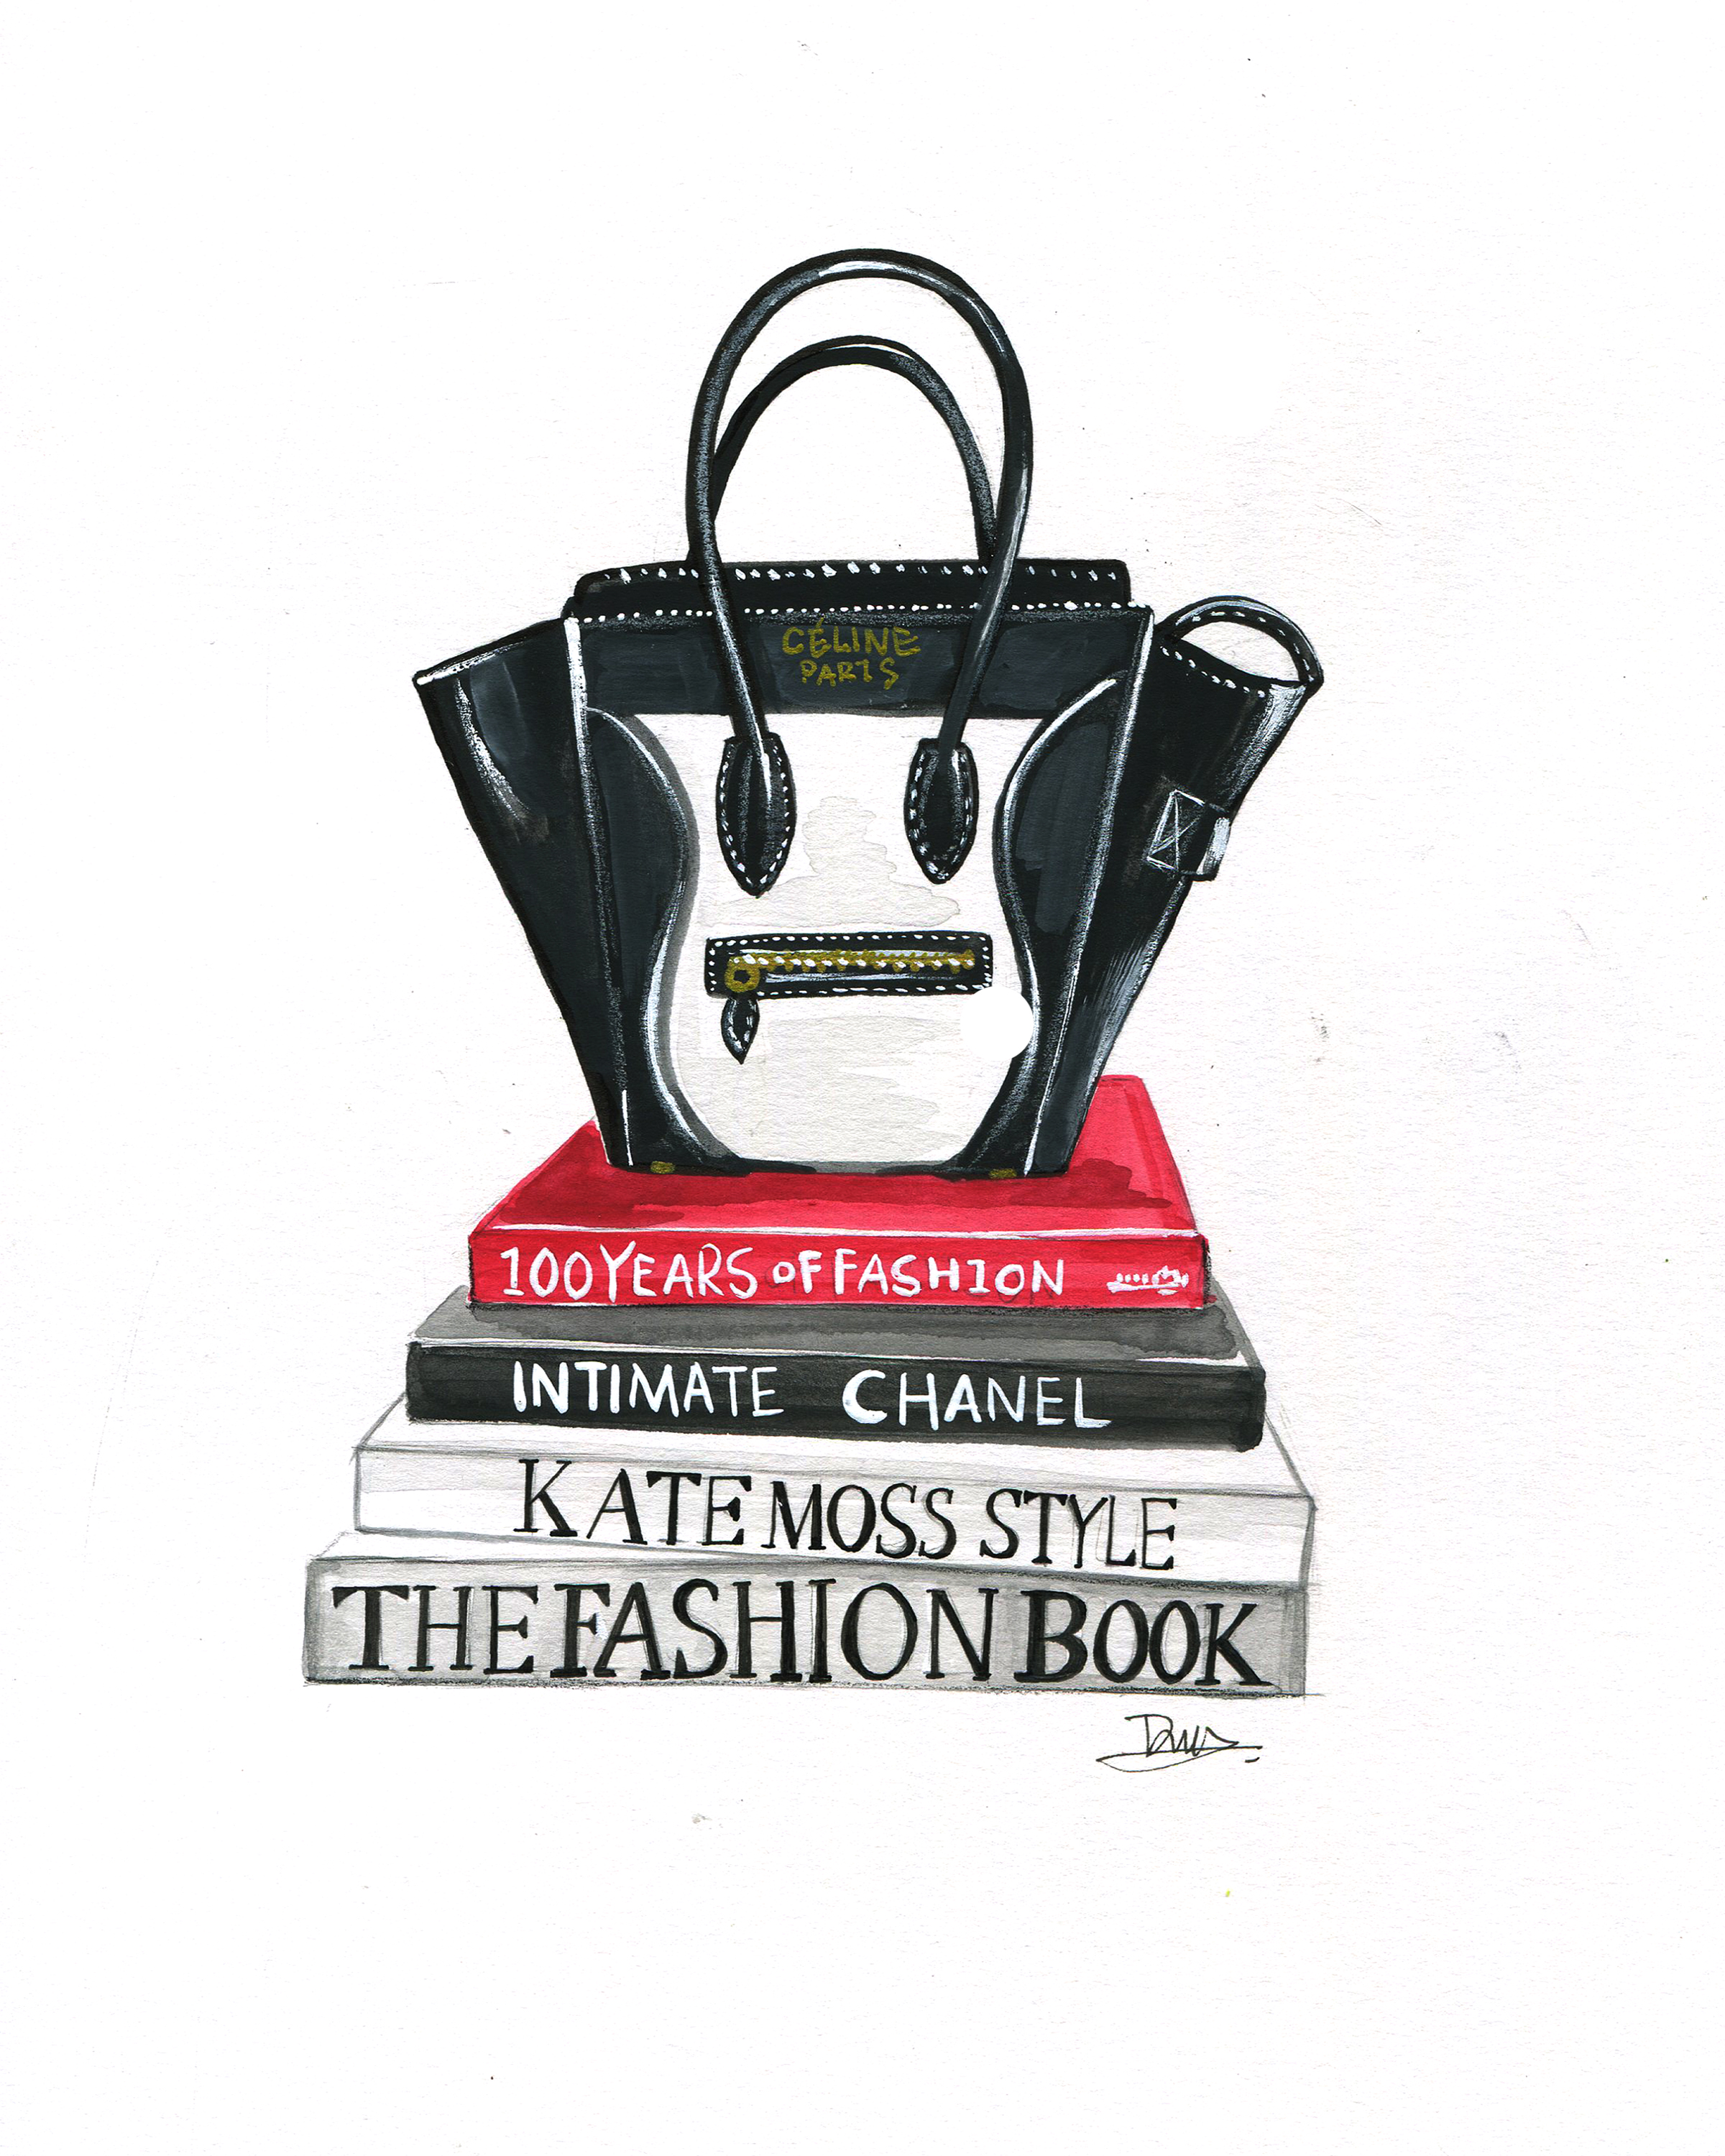 Celine bag illustration by fashion artist Rongrong DeVoe